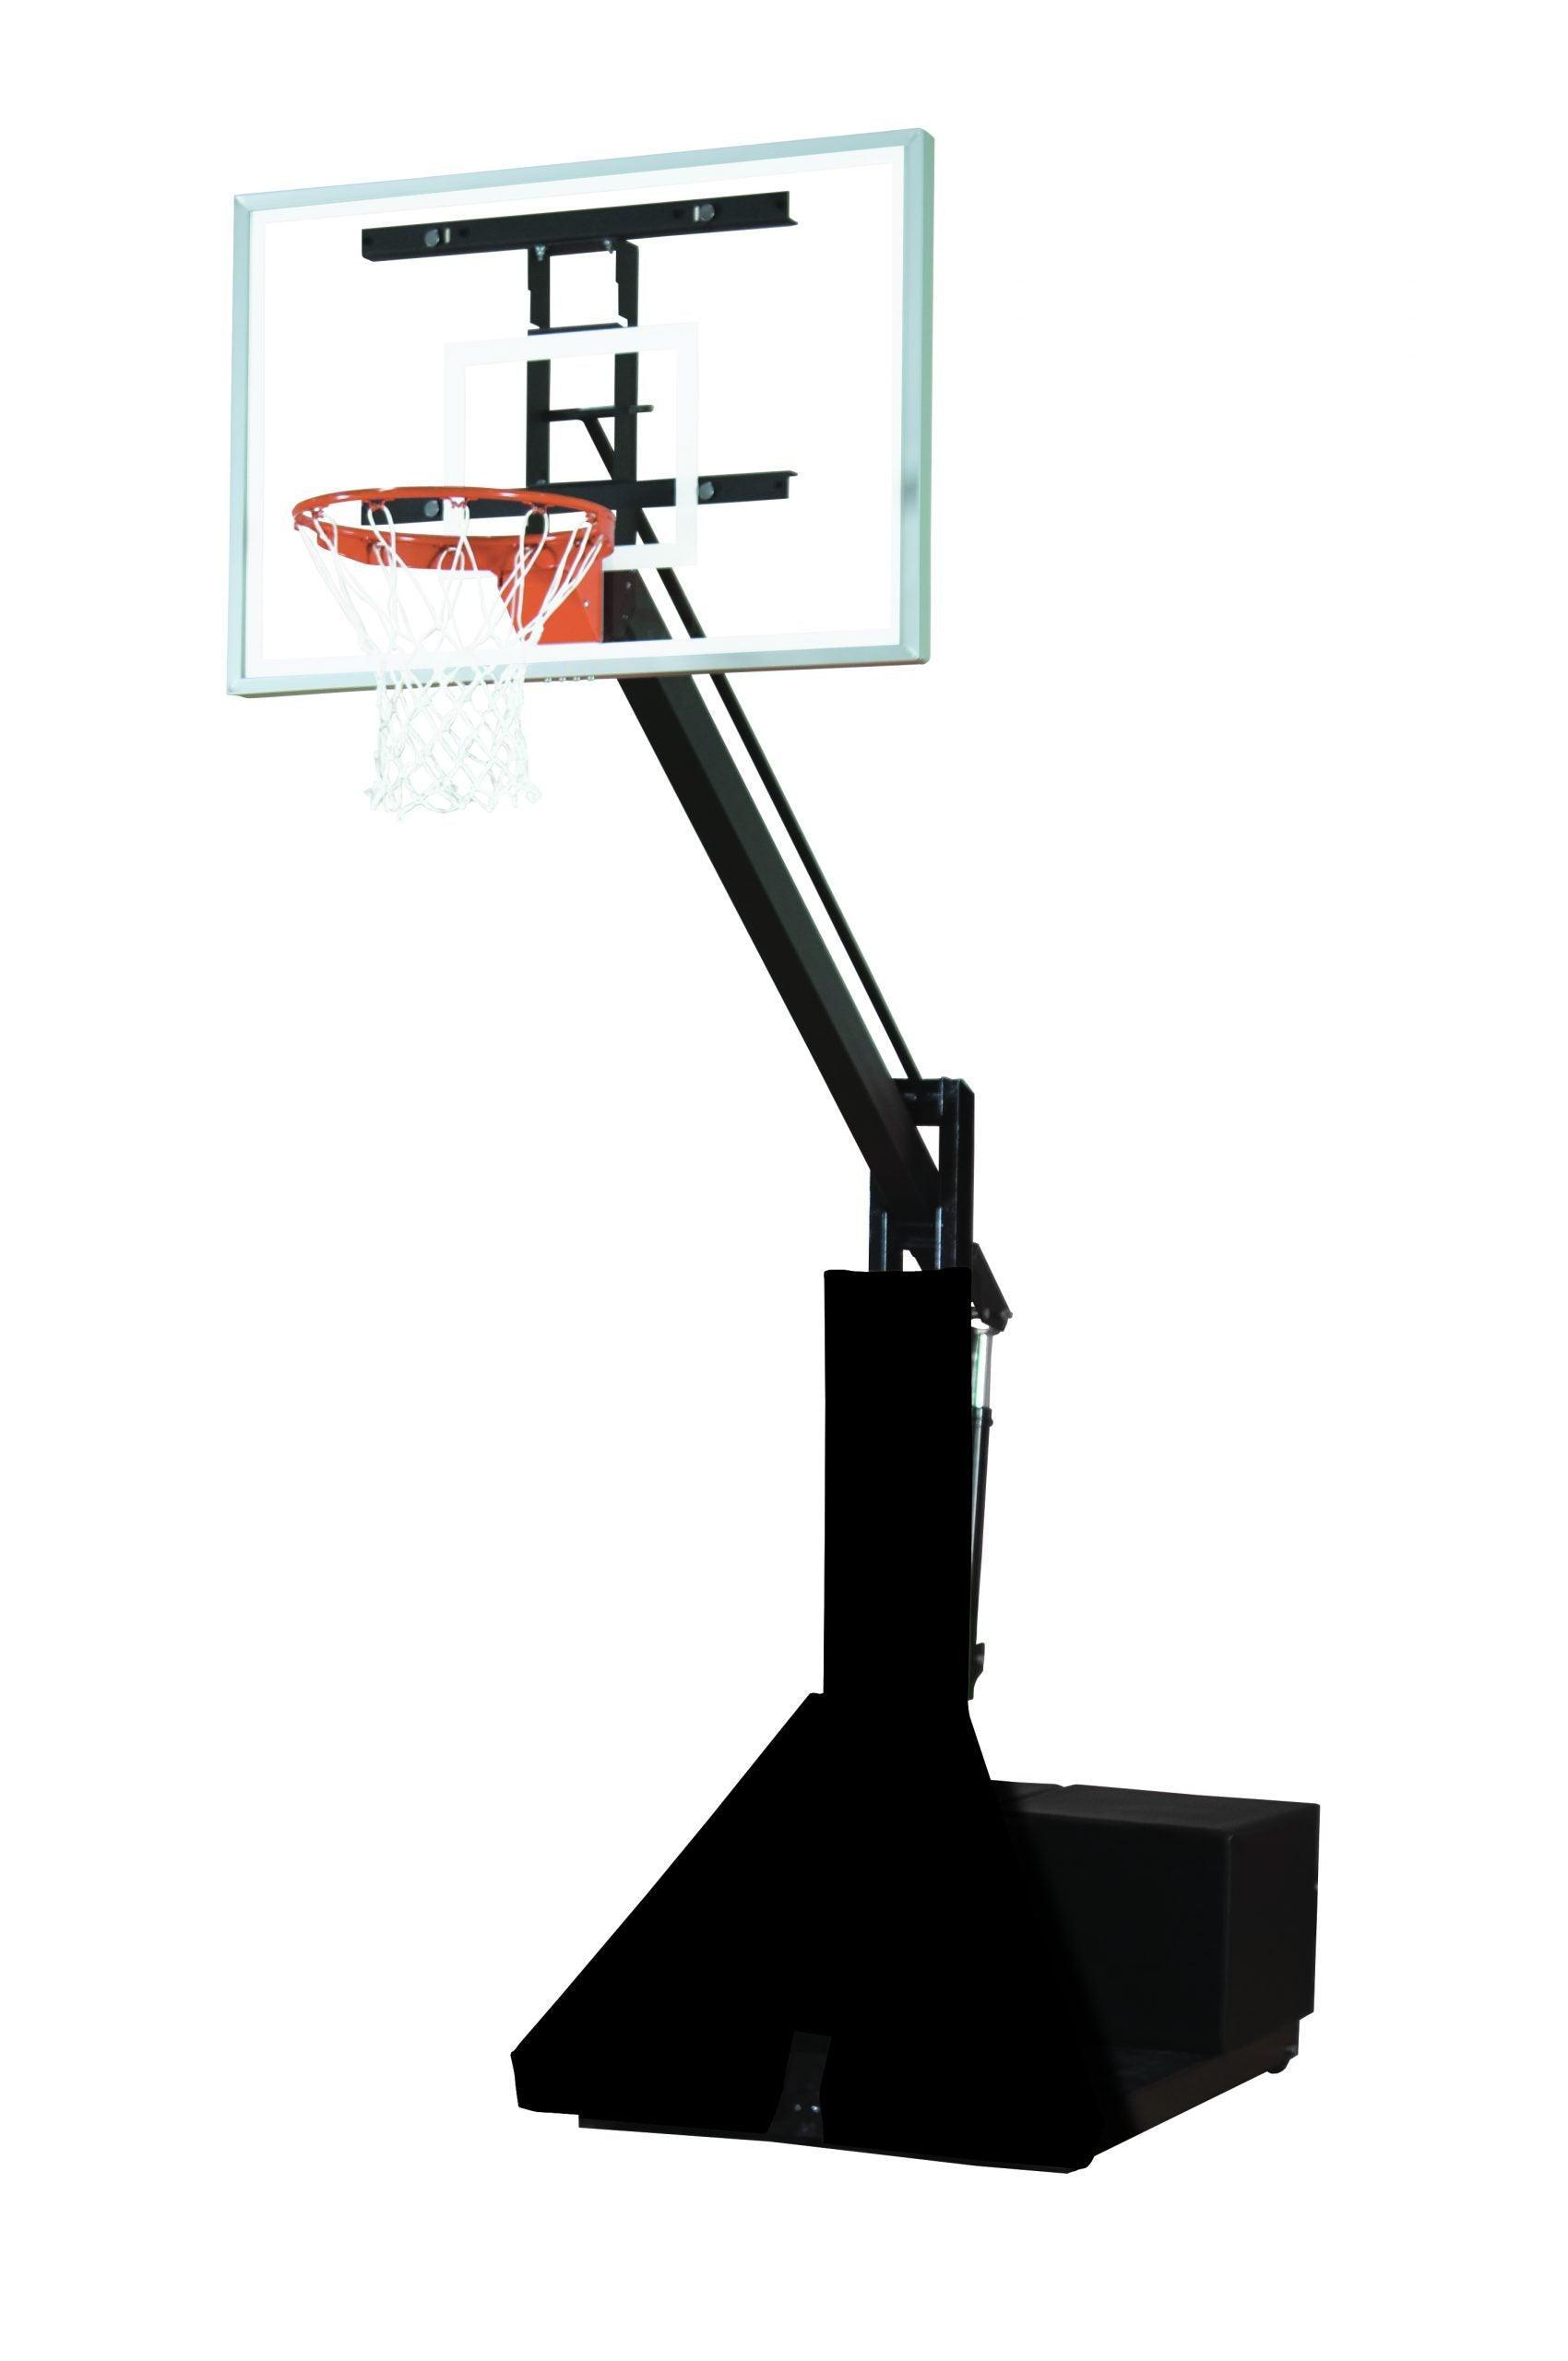 Acrylic Max Portable Adjustable Basketball System - bisoninc